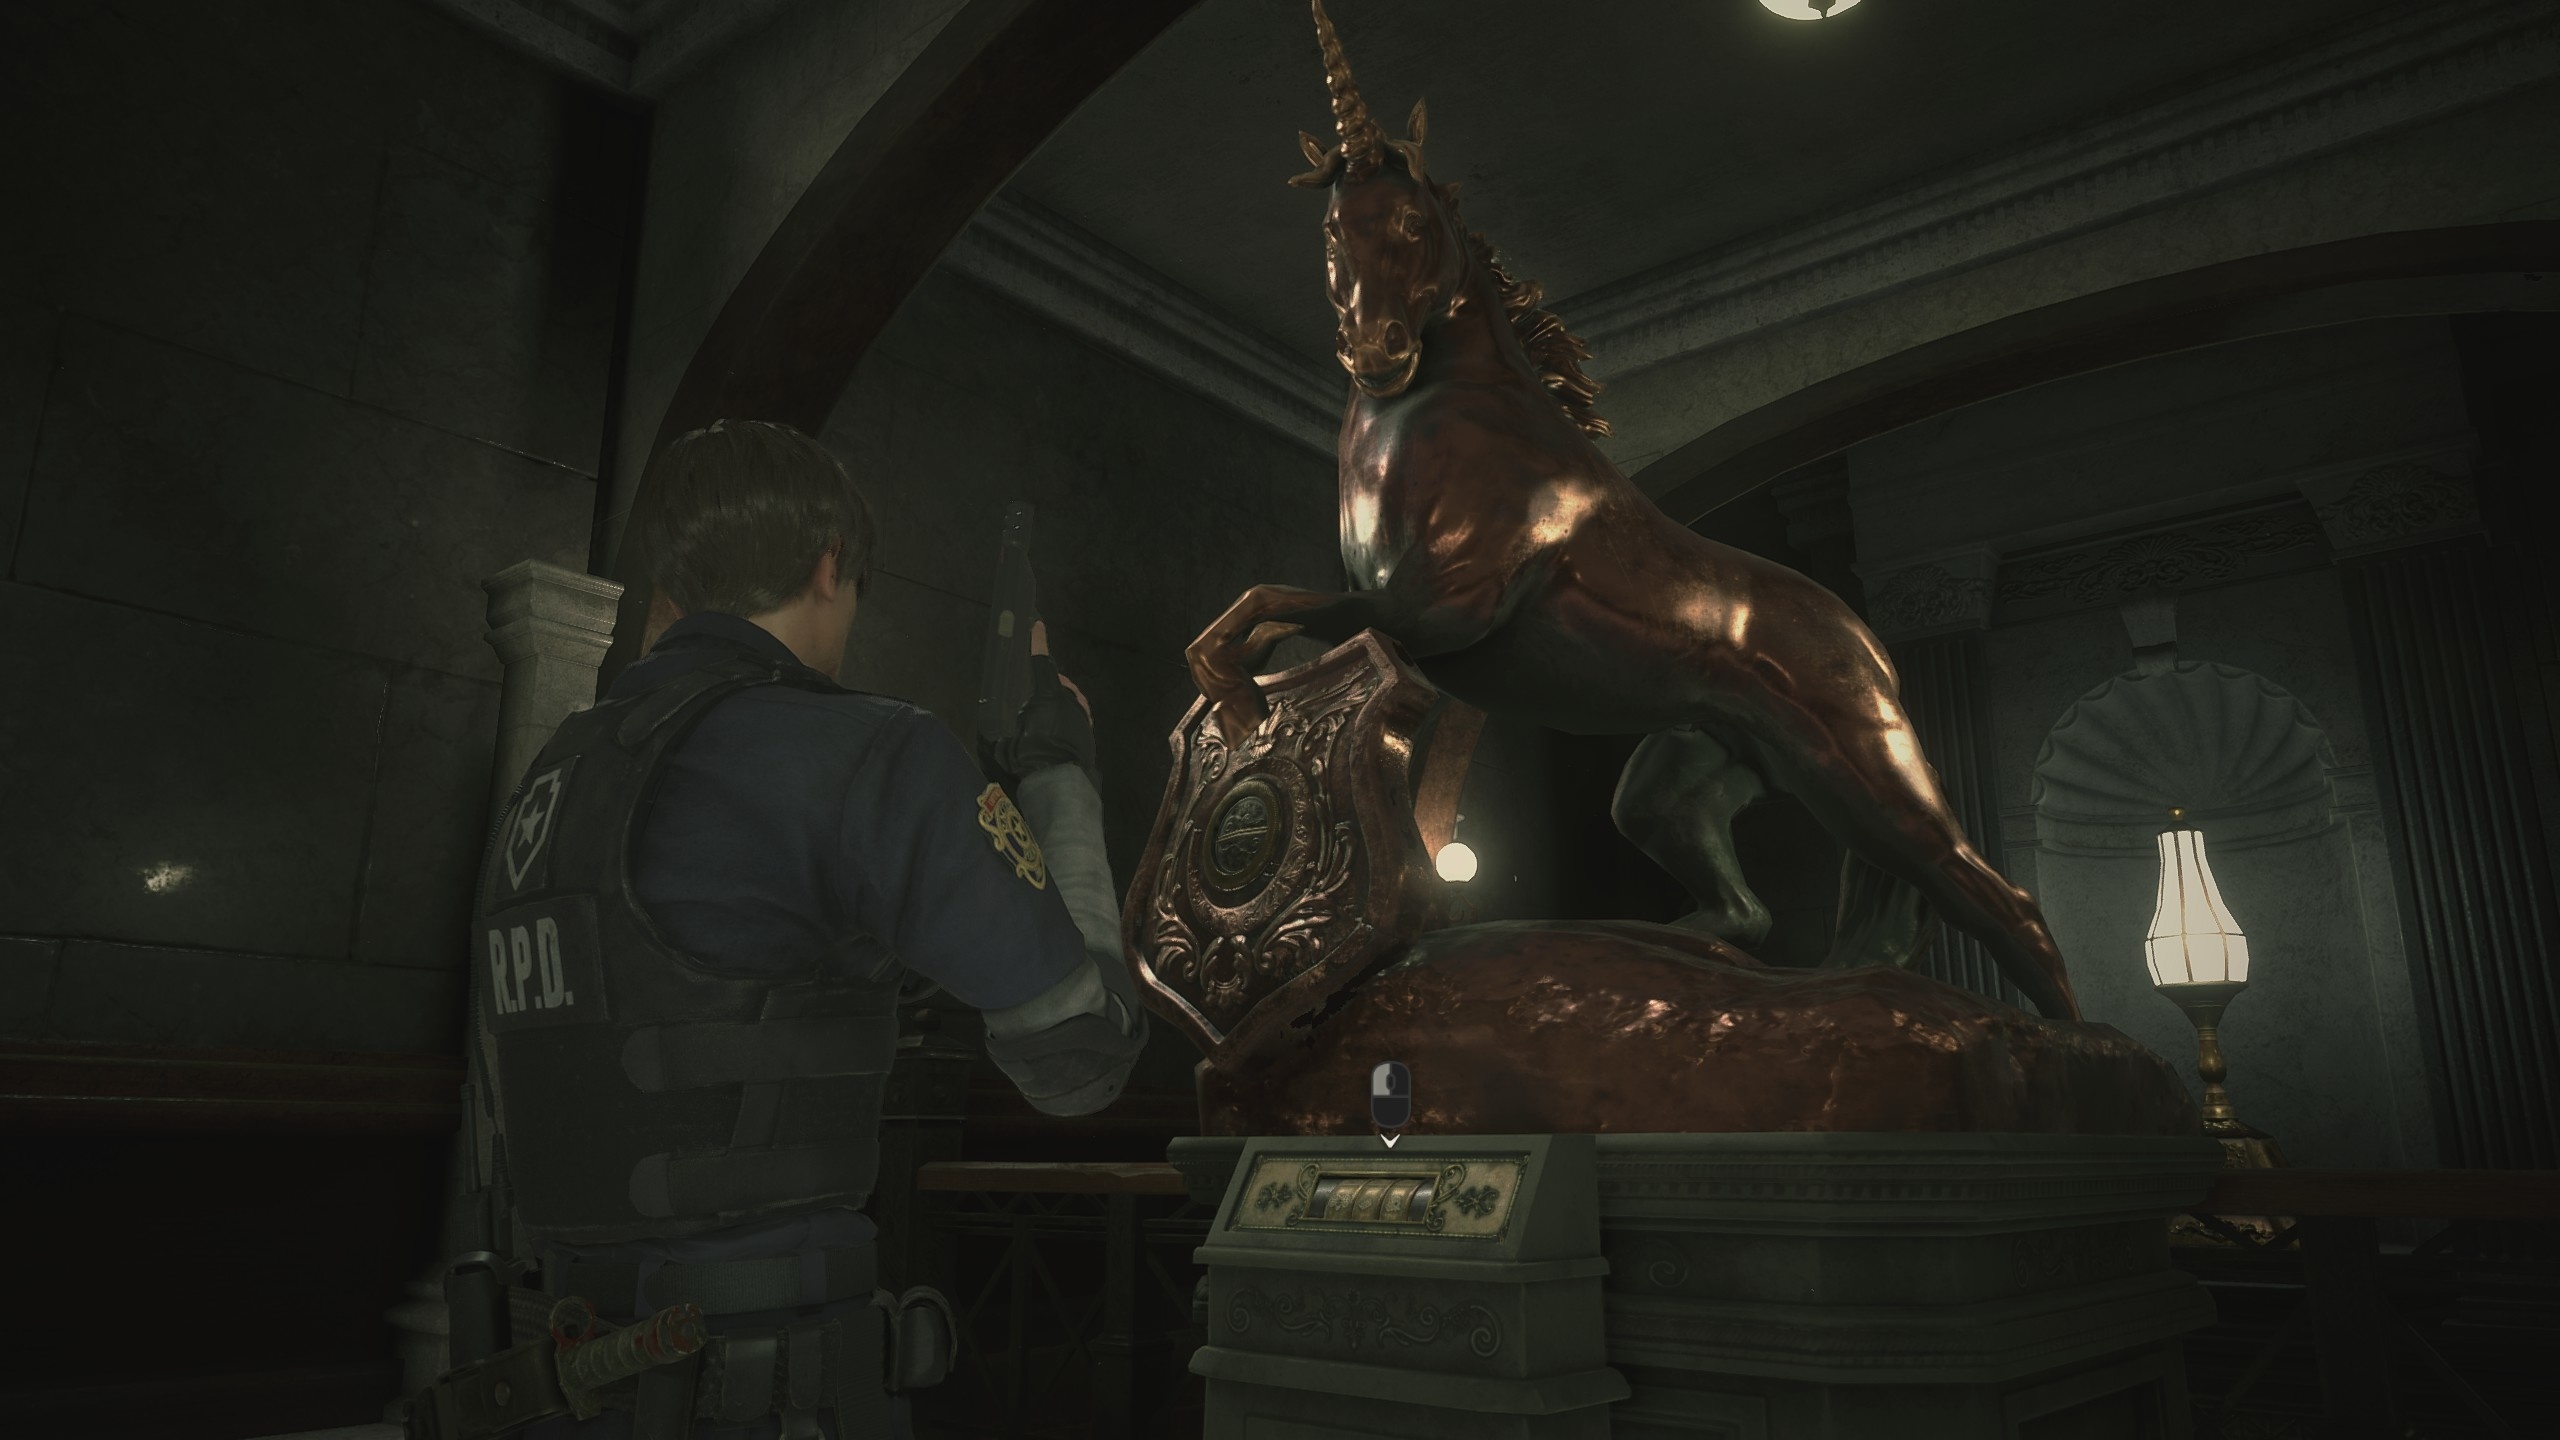 Resident evil 2 единорог. Статуя единорога в Resident Evil 2. Резидент ивел 2 Клэр статуя единорога. Статуя единорога в Resident Evil 2 Remake.